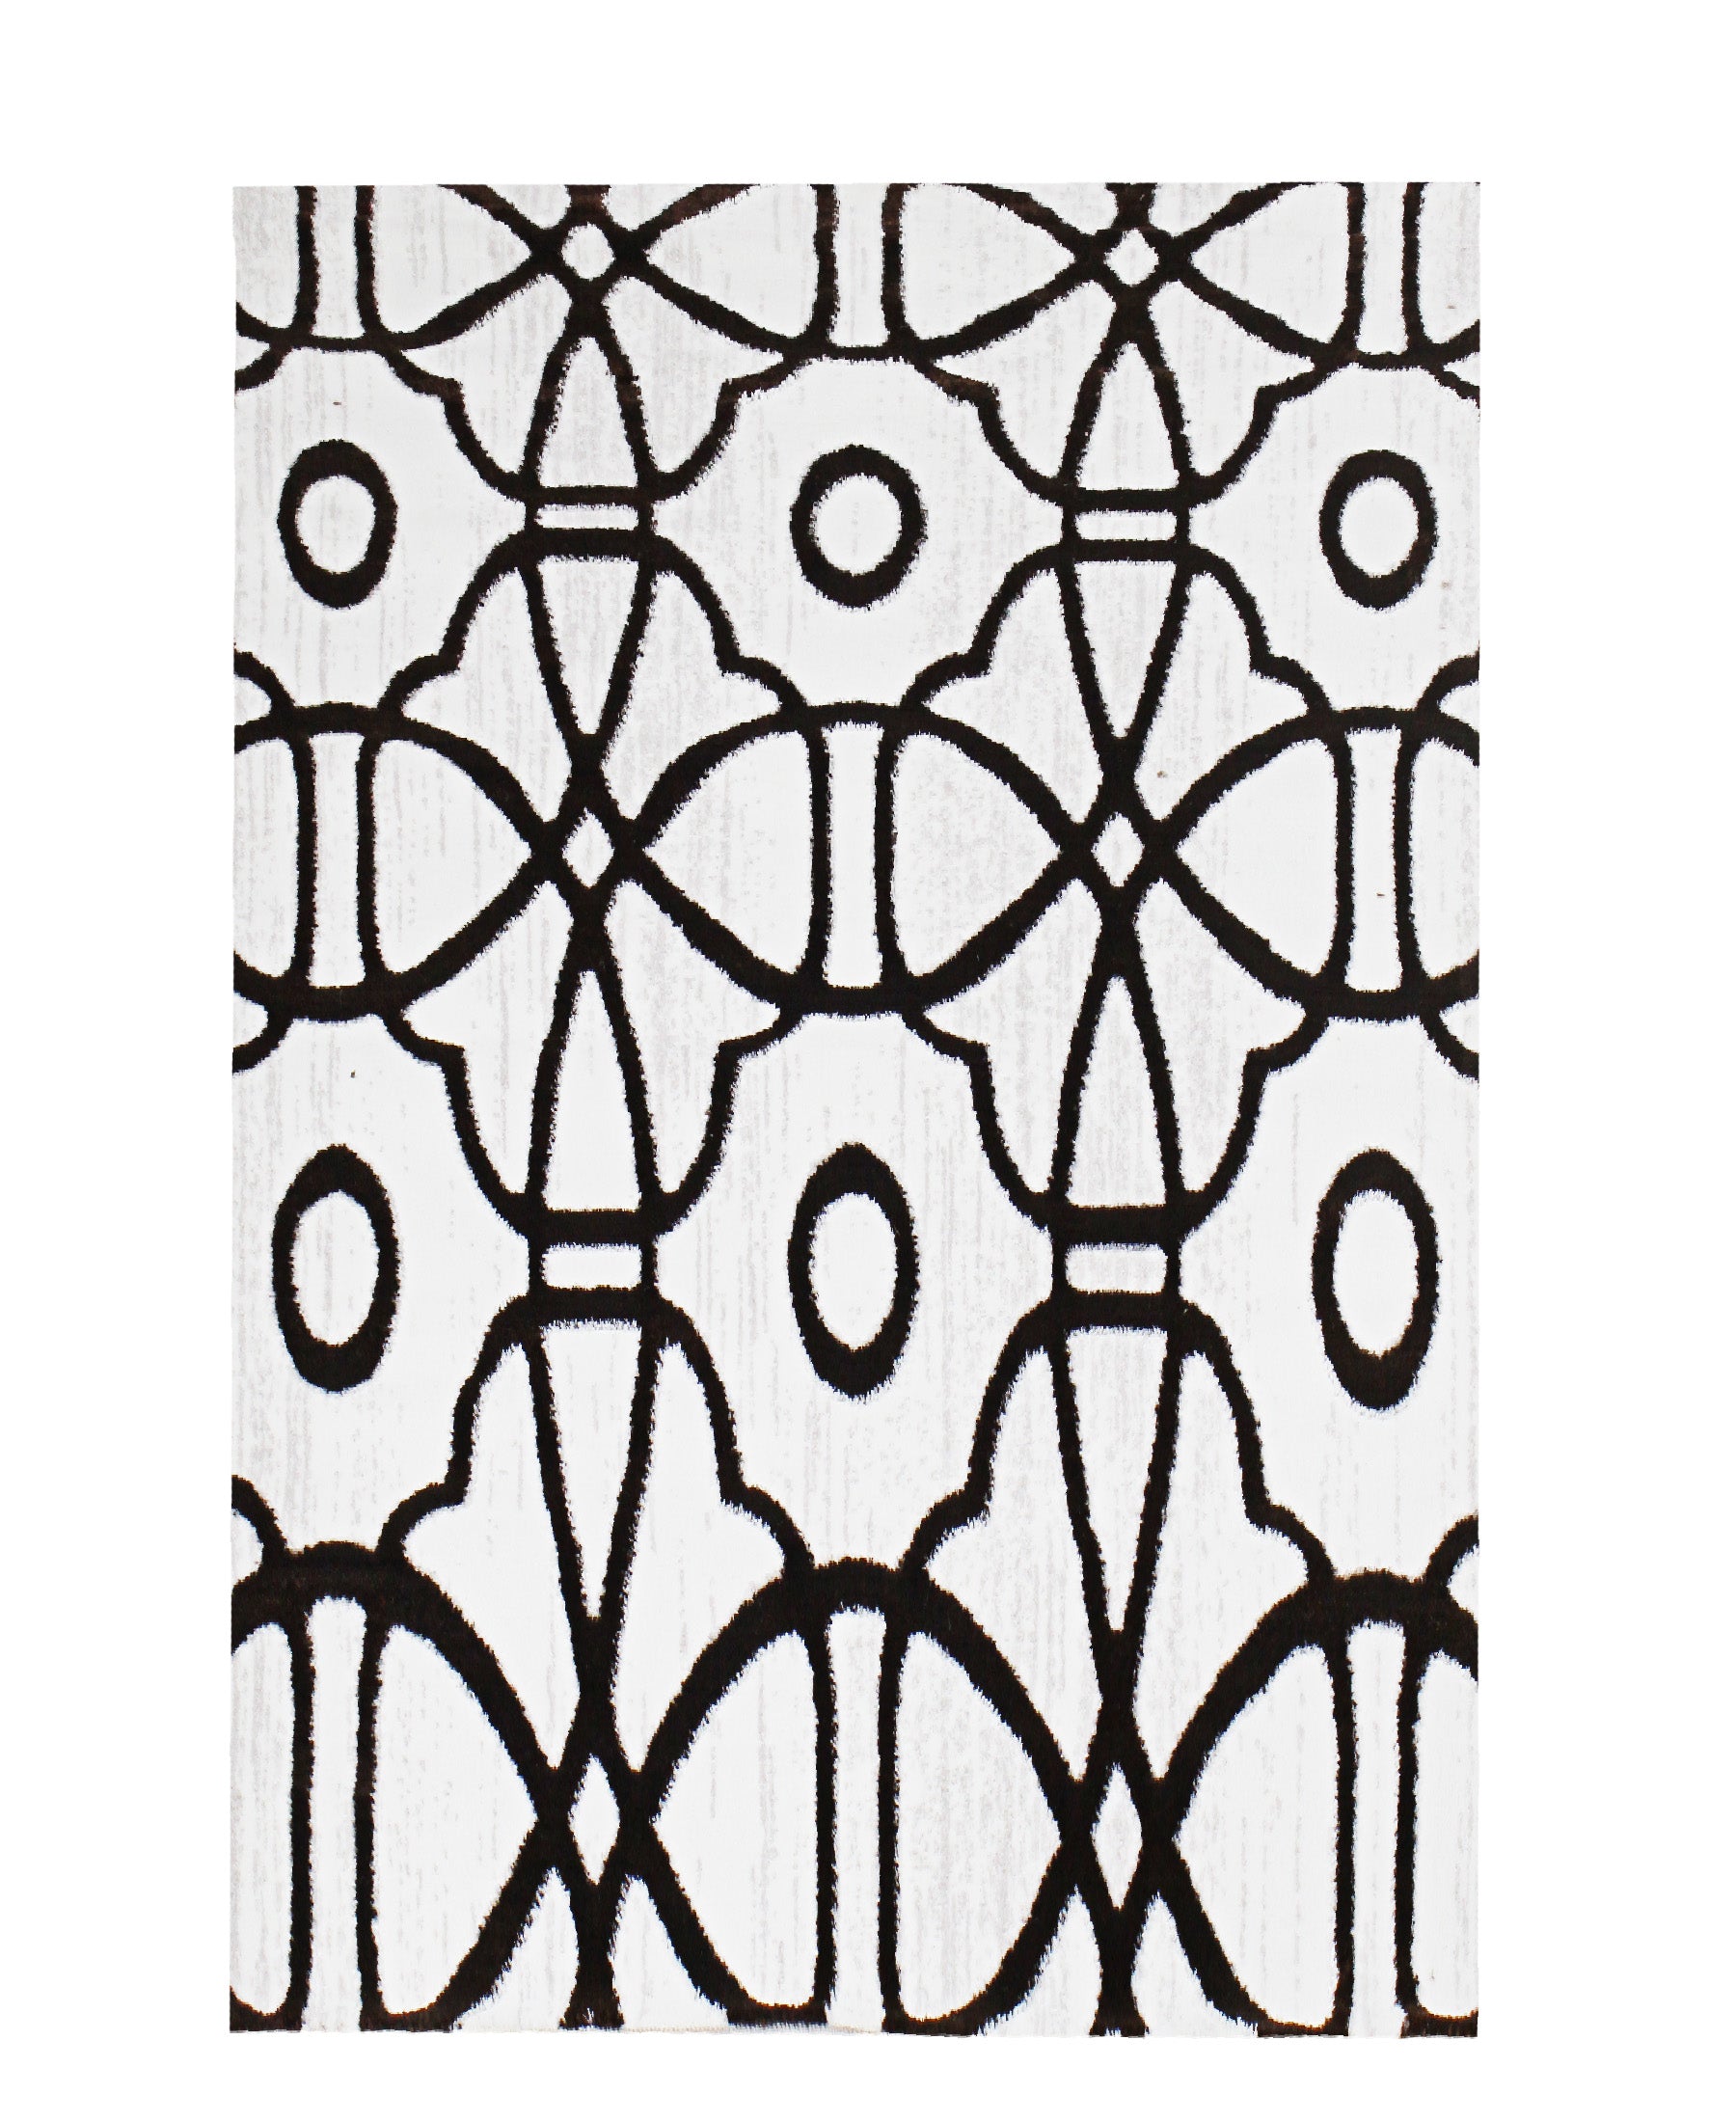 Konya Oracle Carpet 800mm X 1500mm - Chocolate